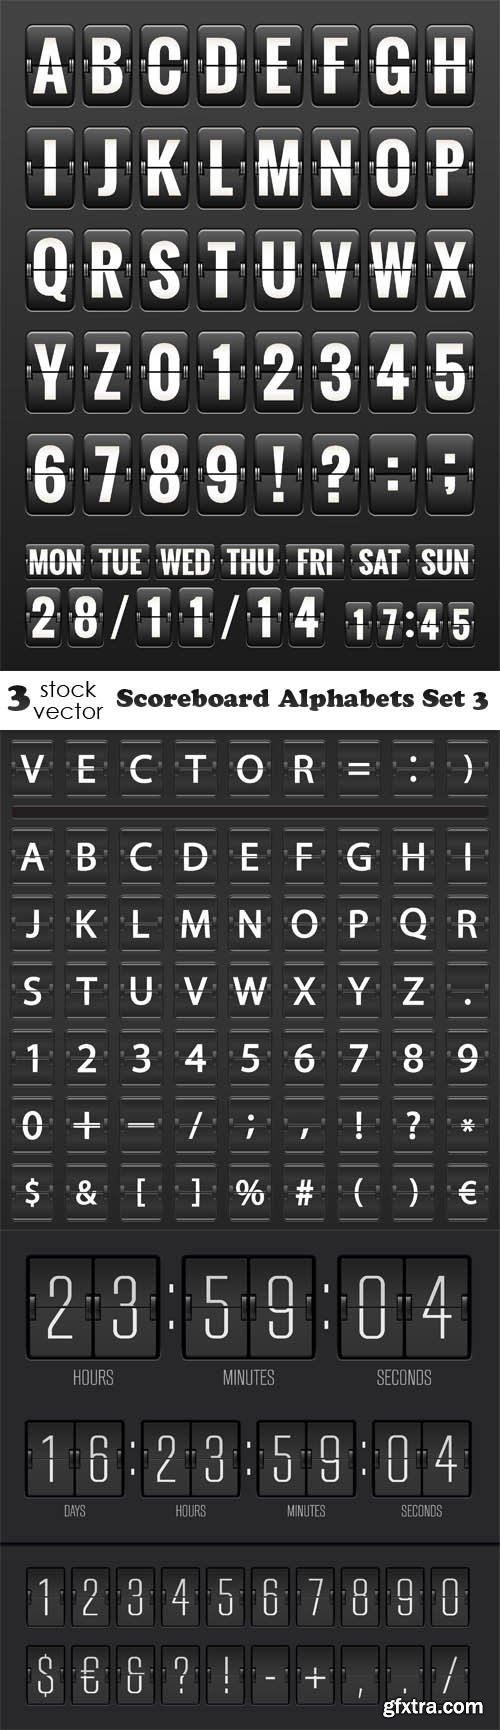 Vectors - Scoreboard Alphabets Set 3